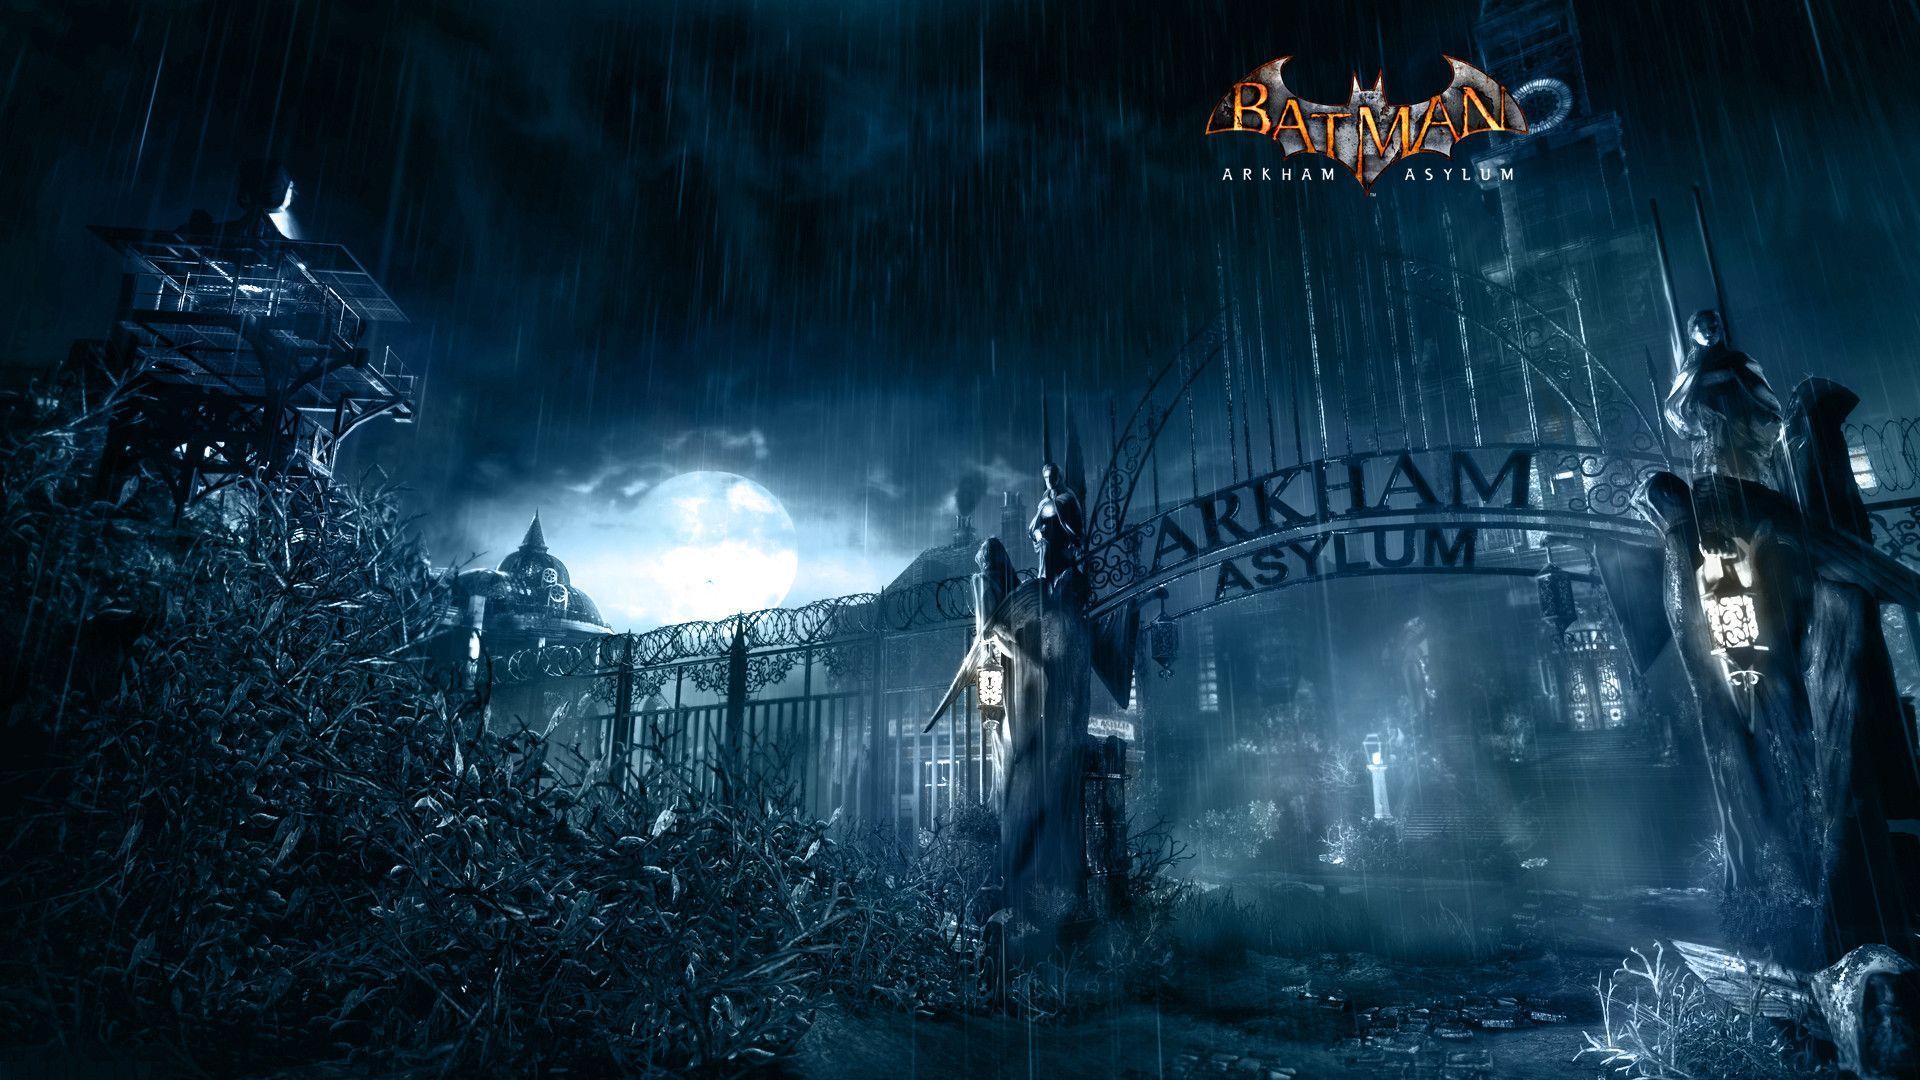 Batman Arkham Asylum HD Wallpapers and Background Images   stmednet